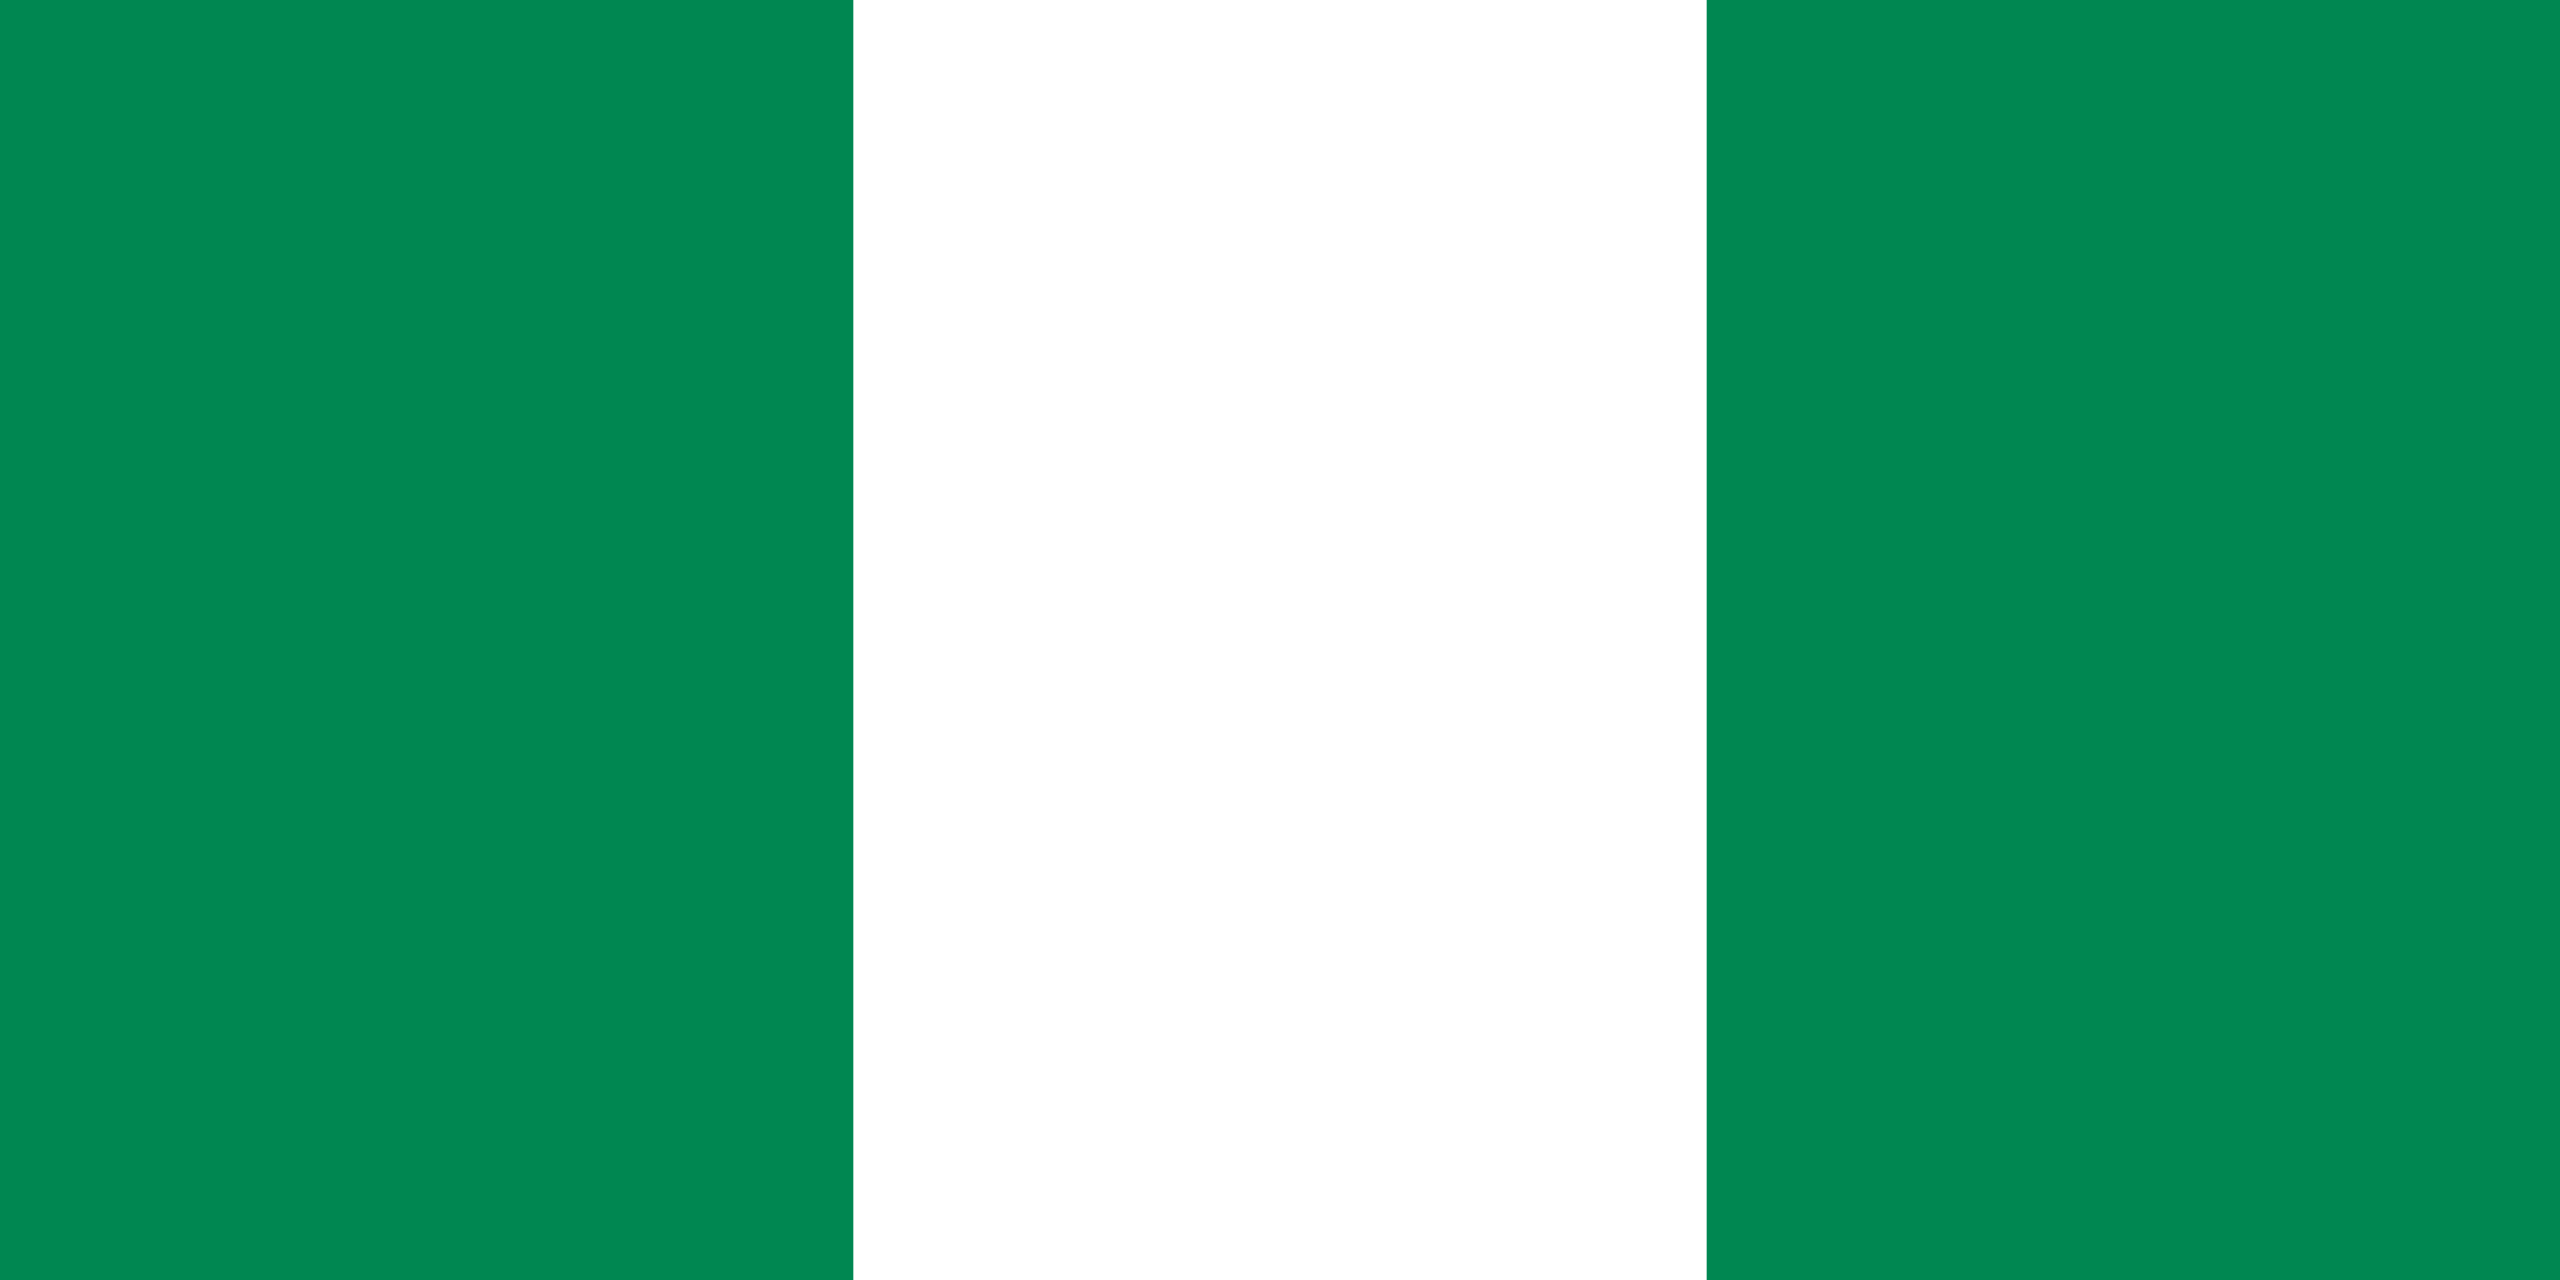 nigerian national flag